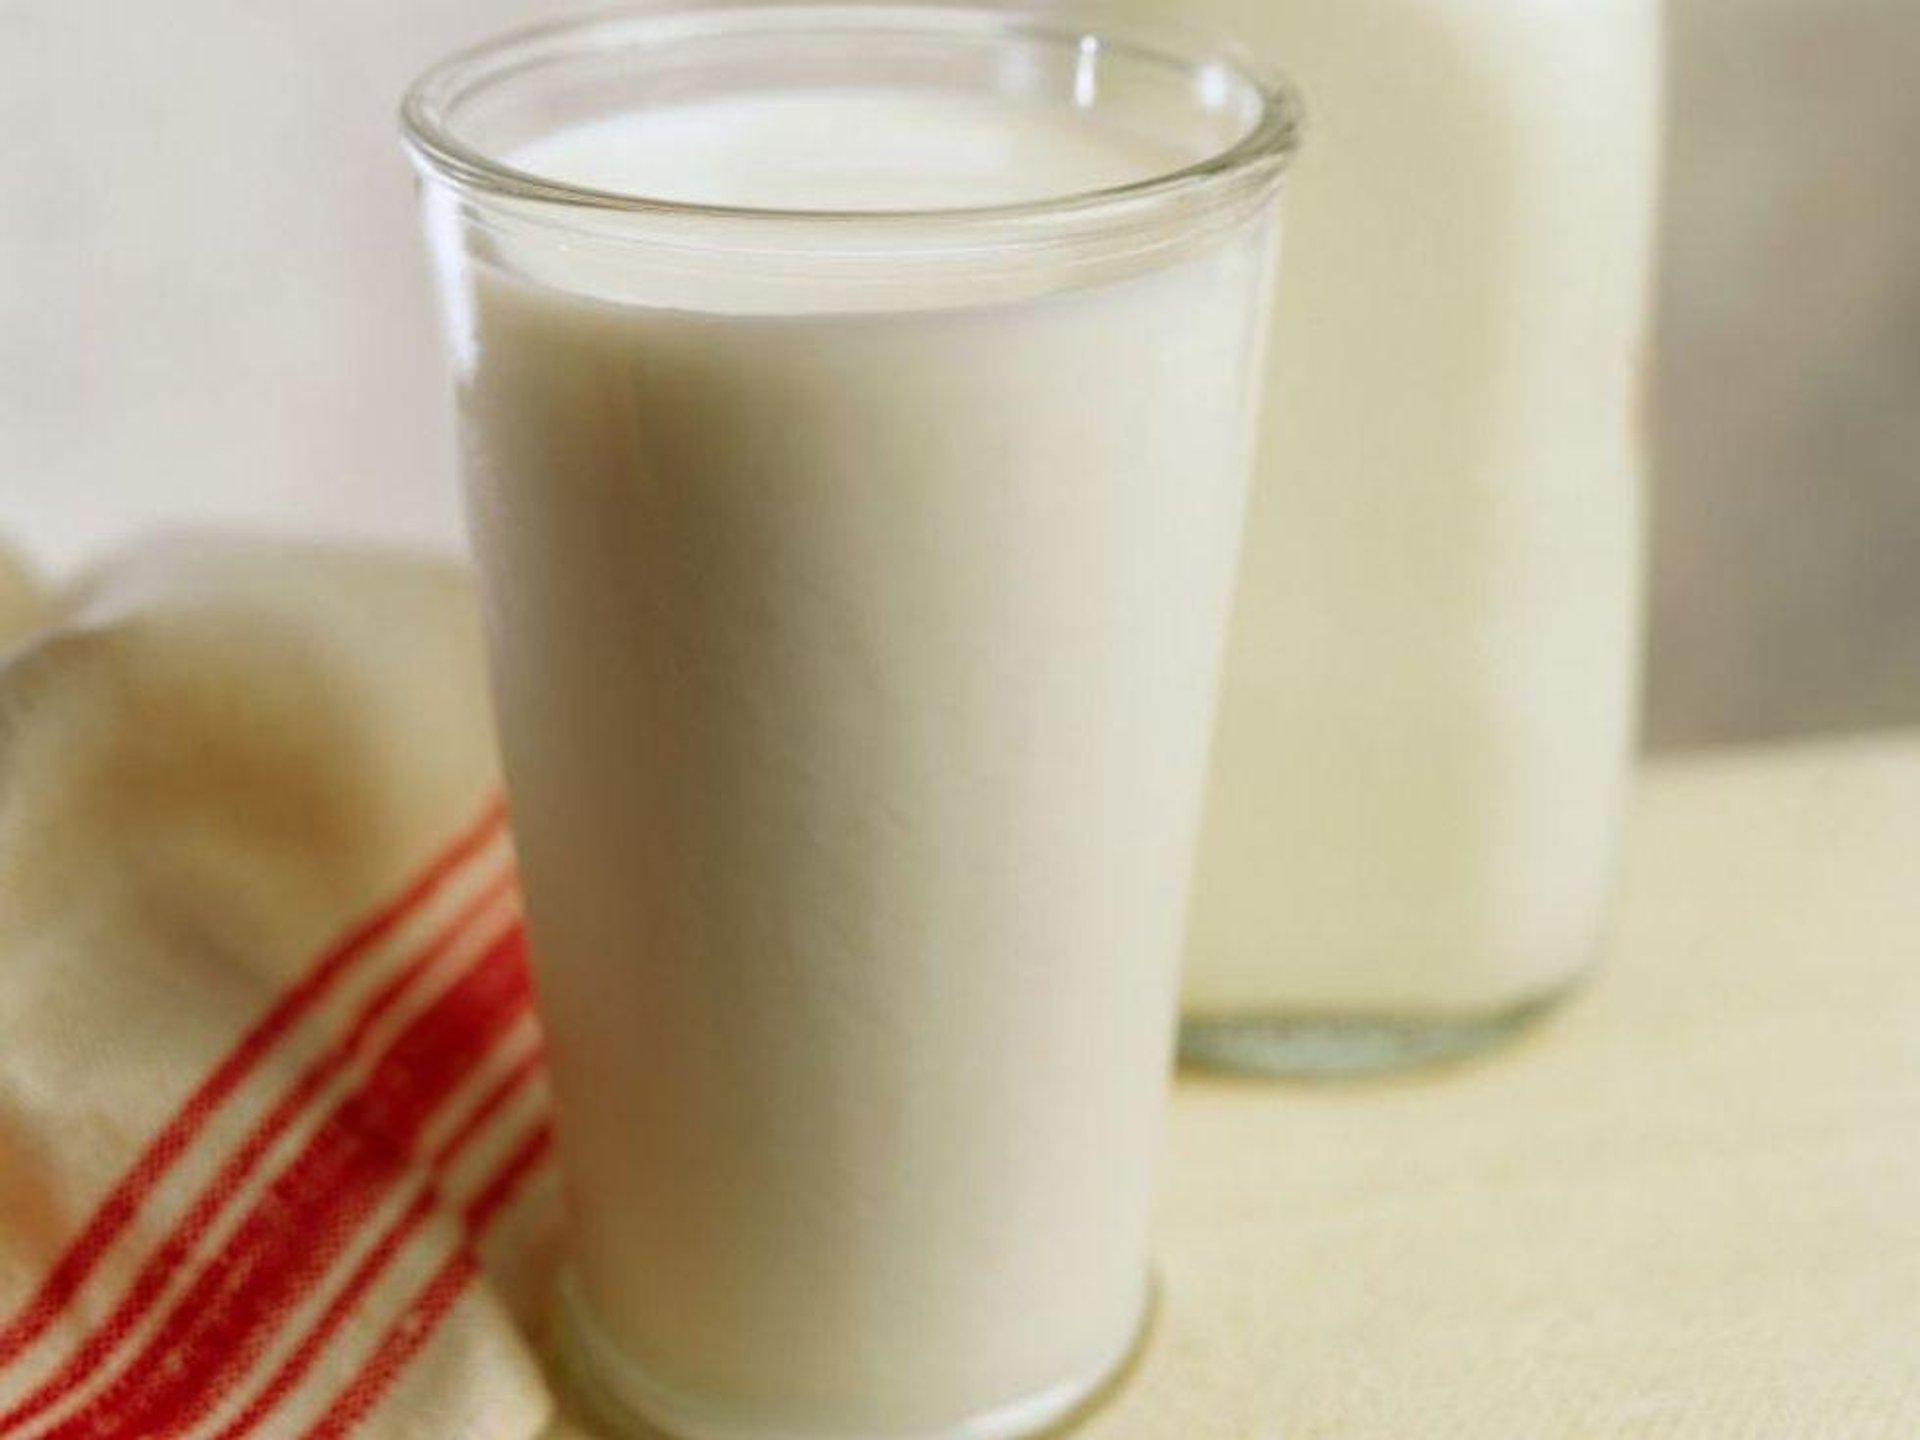 Prehistoric People Drank Animal Milk, Despite Lactose Intolerance - Drugs.c...